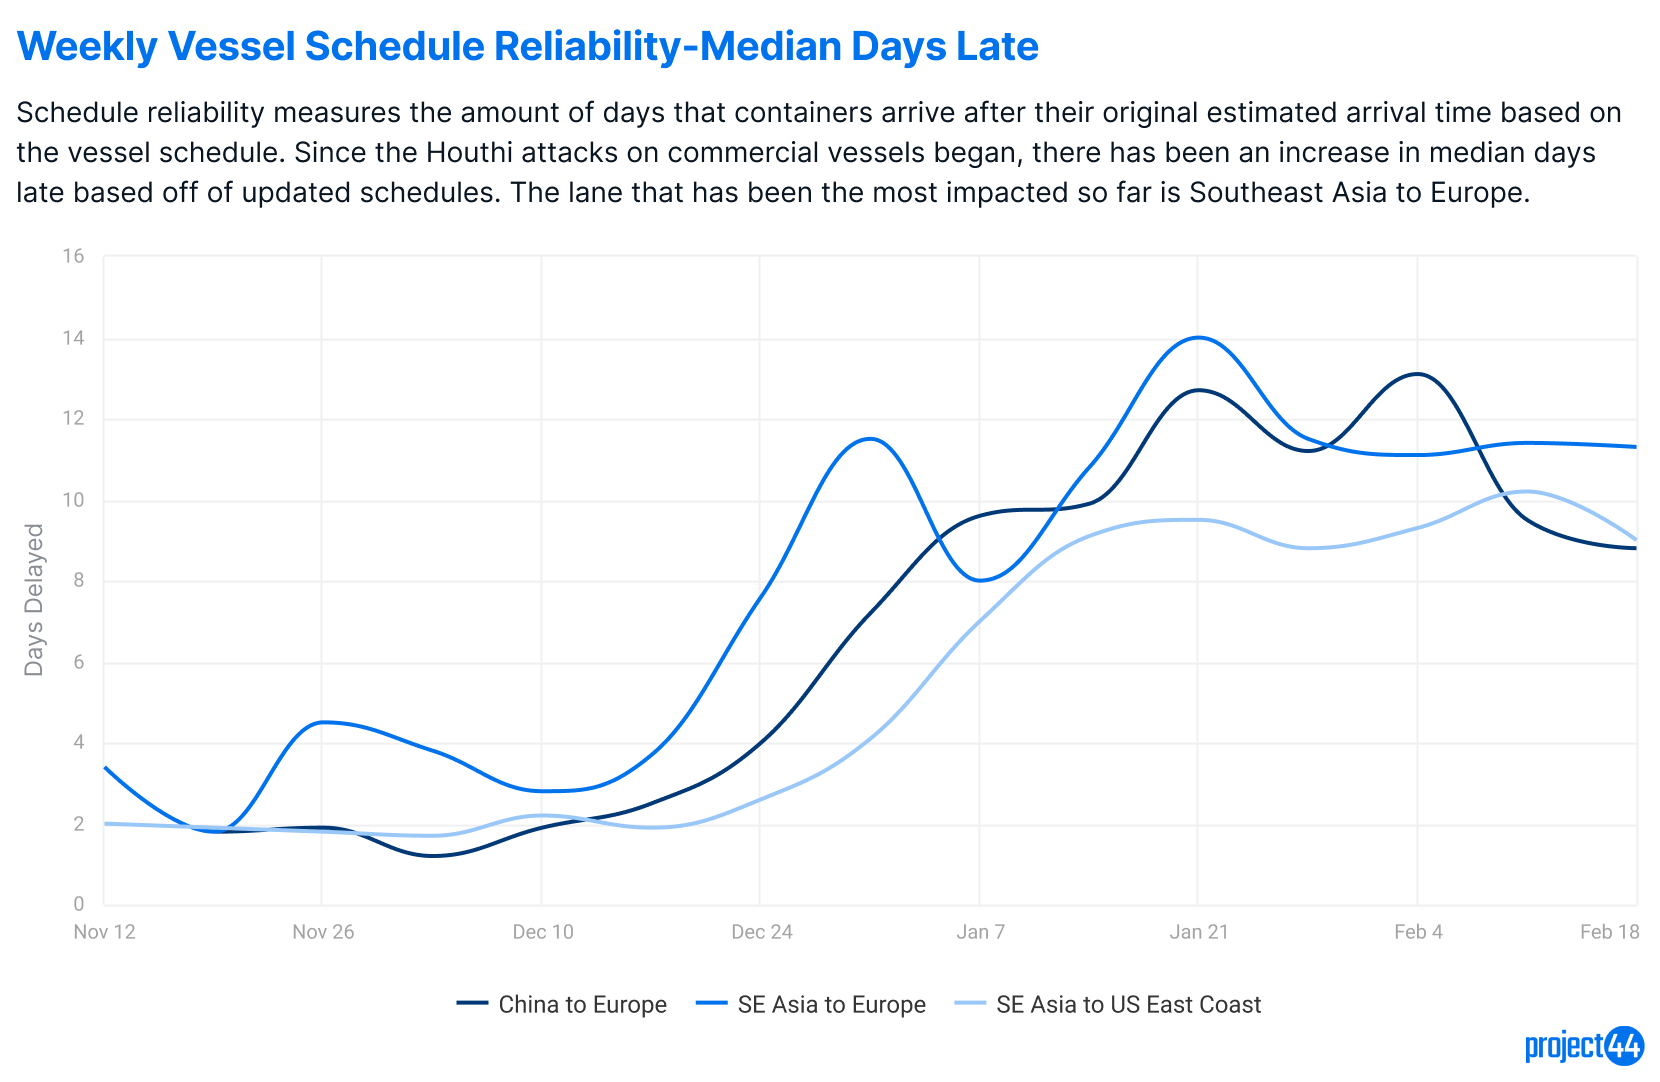 Feb 26 Vessel Schedule Reliability